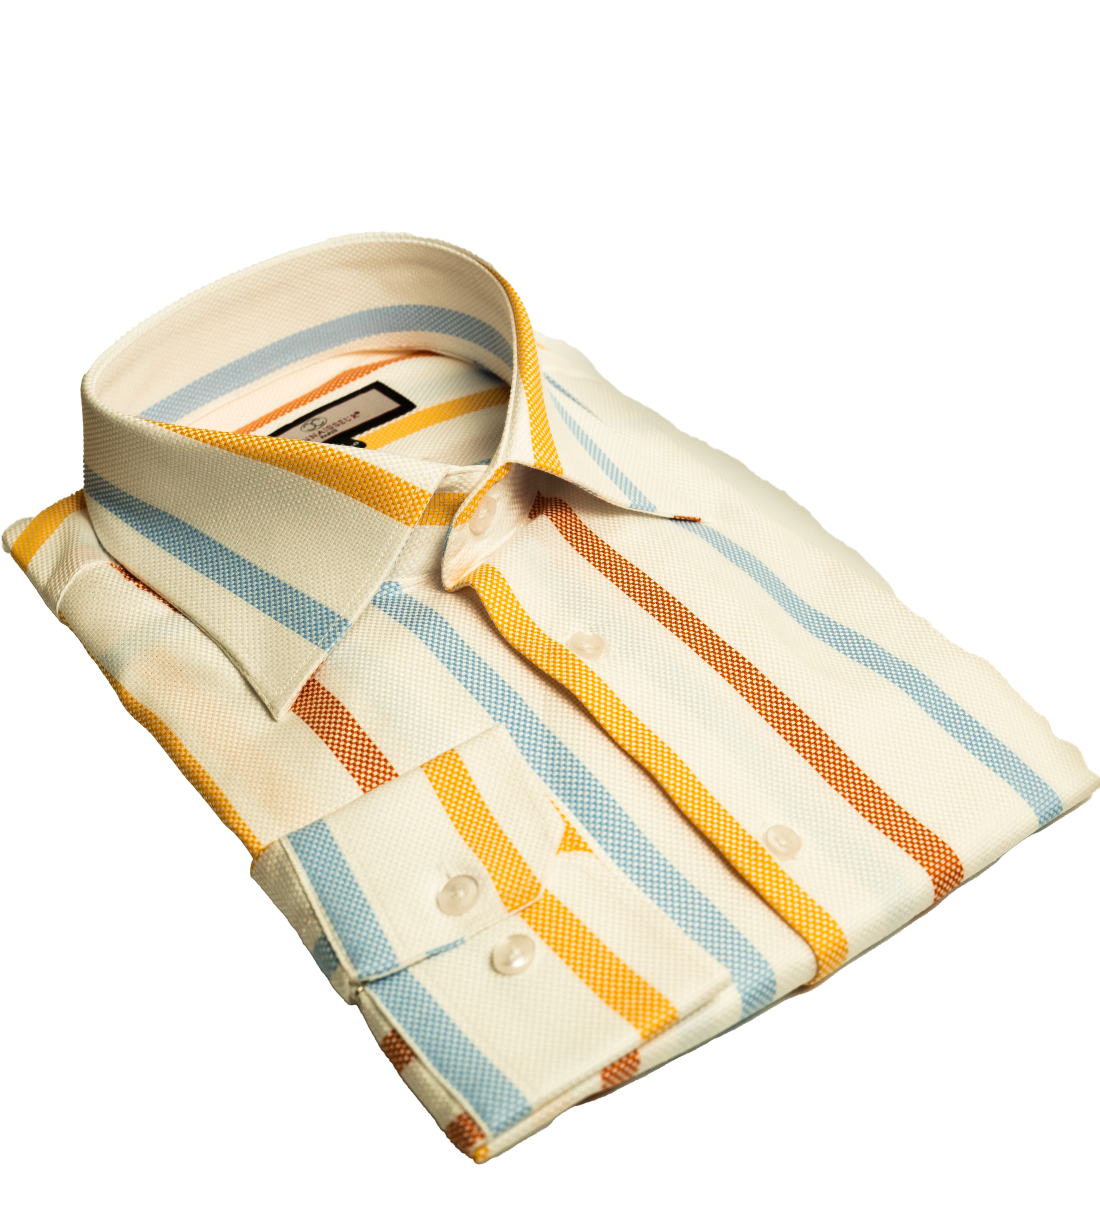 Connaisseur - White with yellow, orange and blue plaid slim fit dress shirt